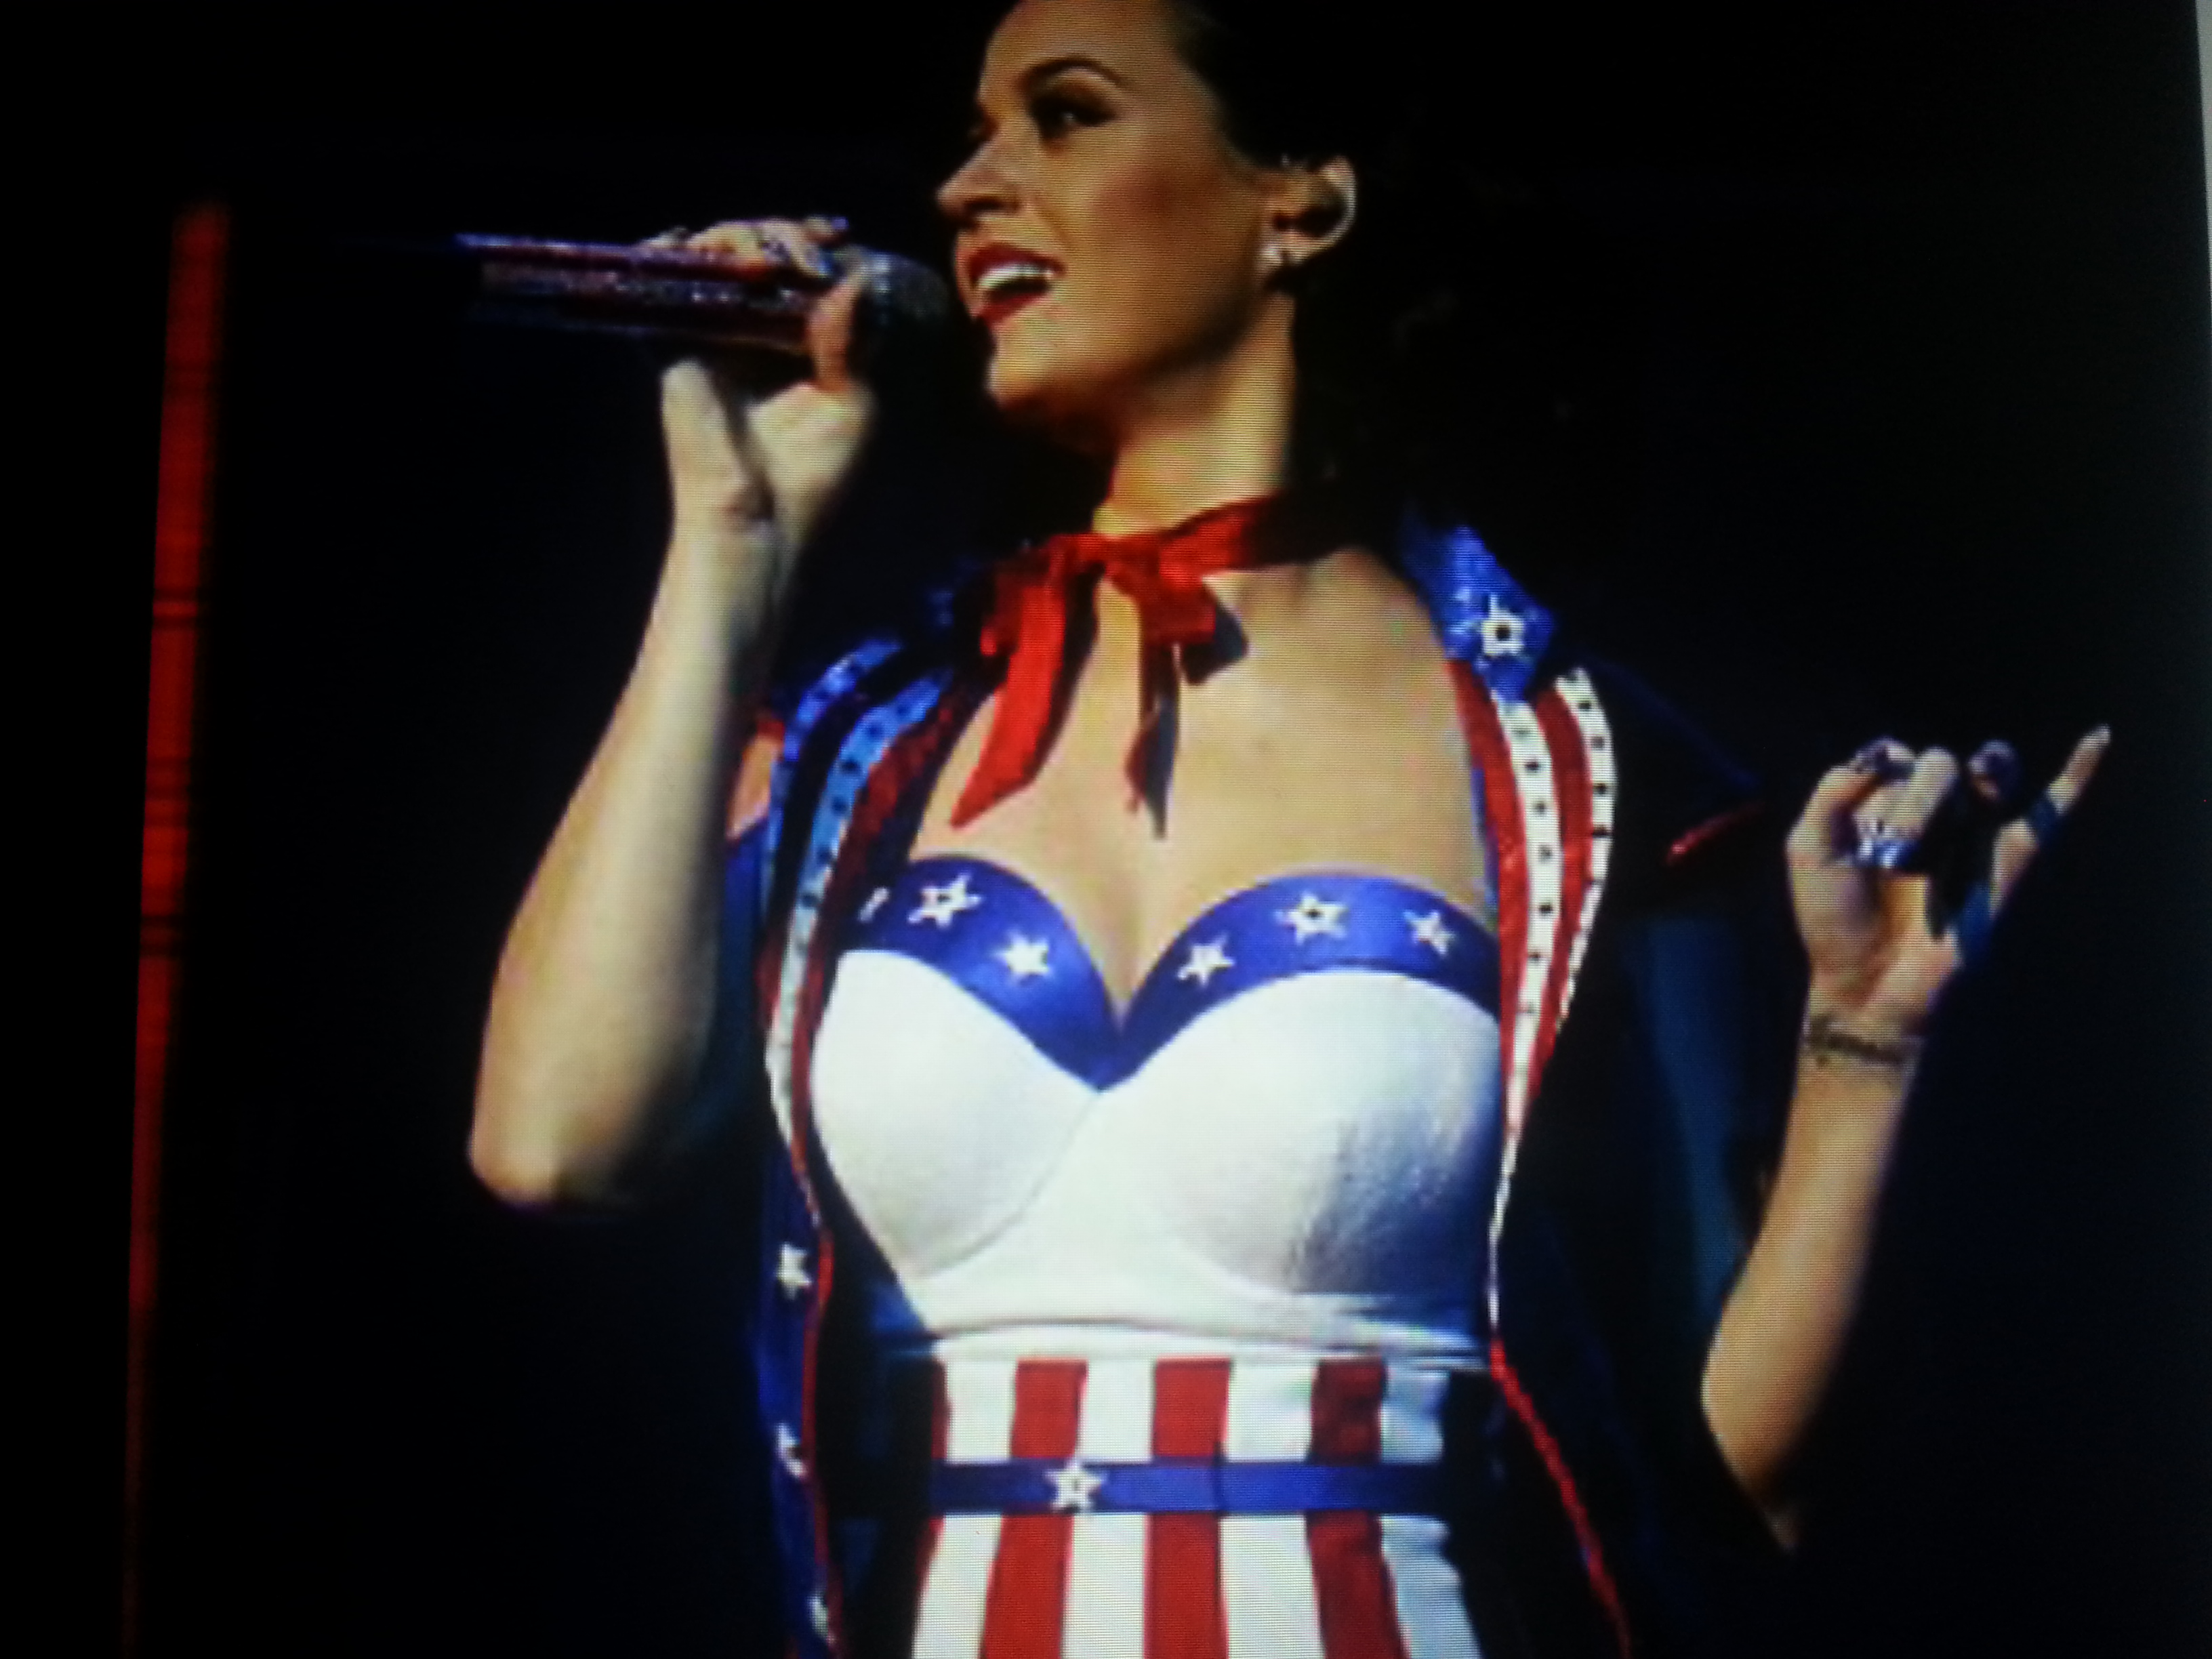 Beste/ r Sänger/in ~ hat Katy Perry zurecht gewonnen?